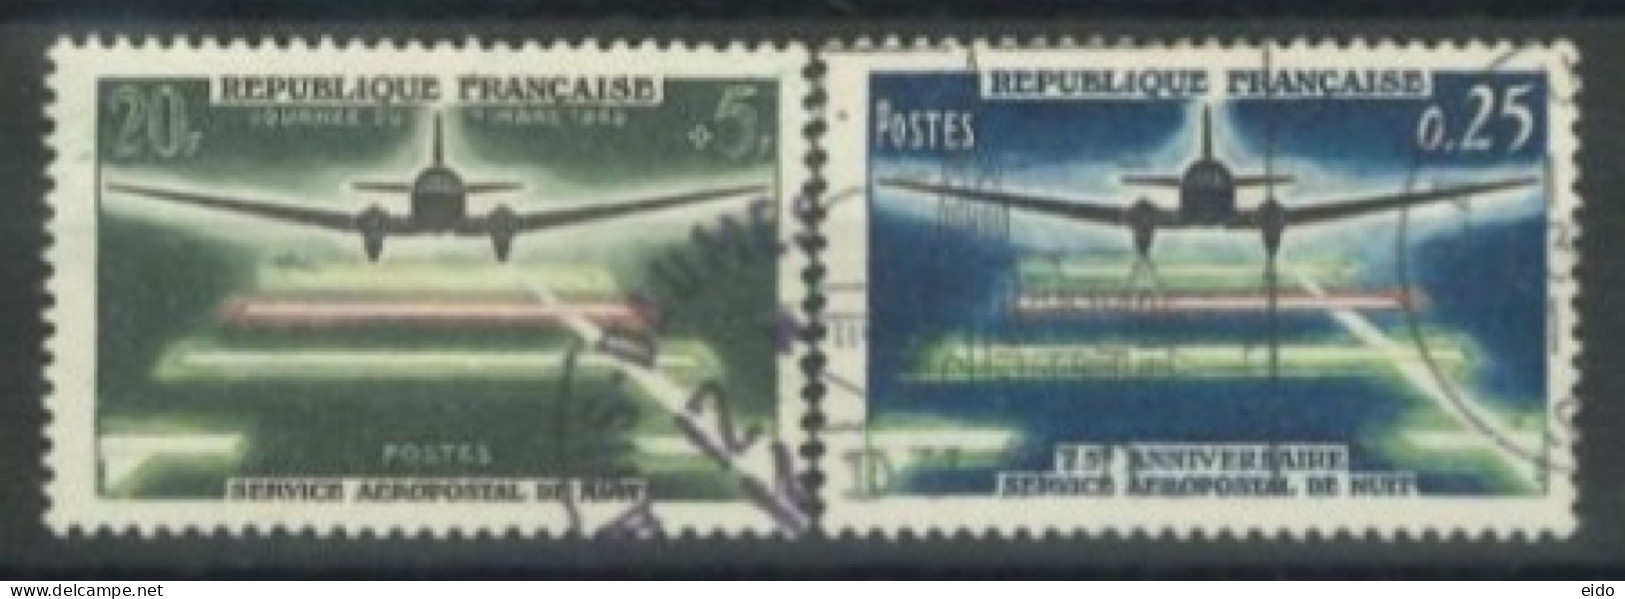 FRANCE - 1959. 64, POST DAY STAMPS SET OF 2, USED - Oblitérés